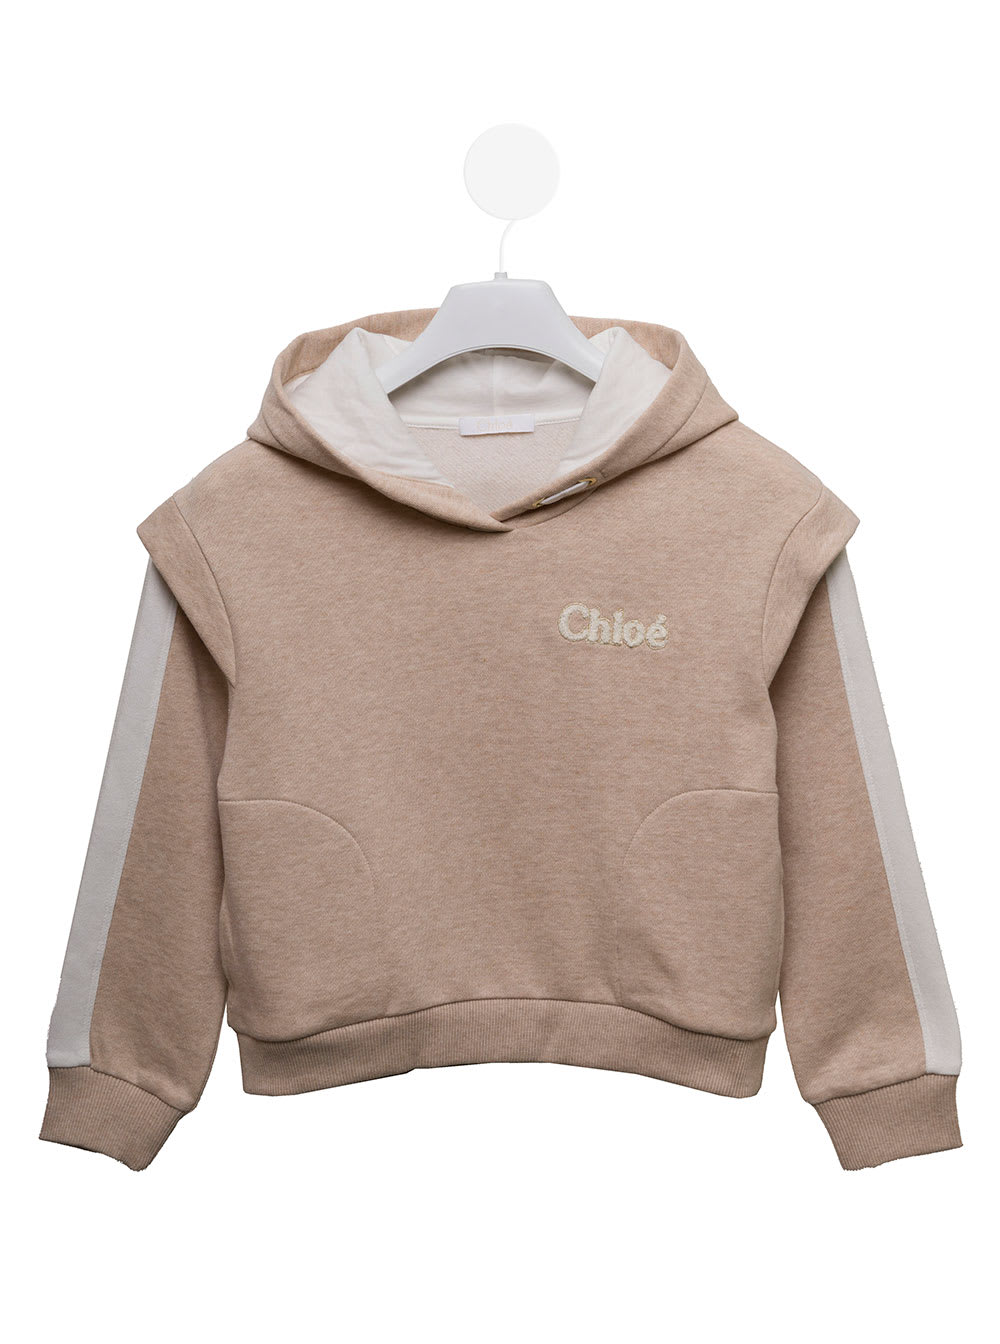 Chloé Kids Baby Girls Beige Hooded Sweatshirt